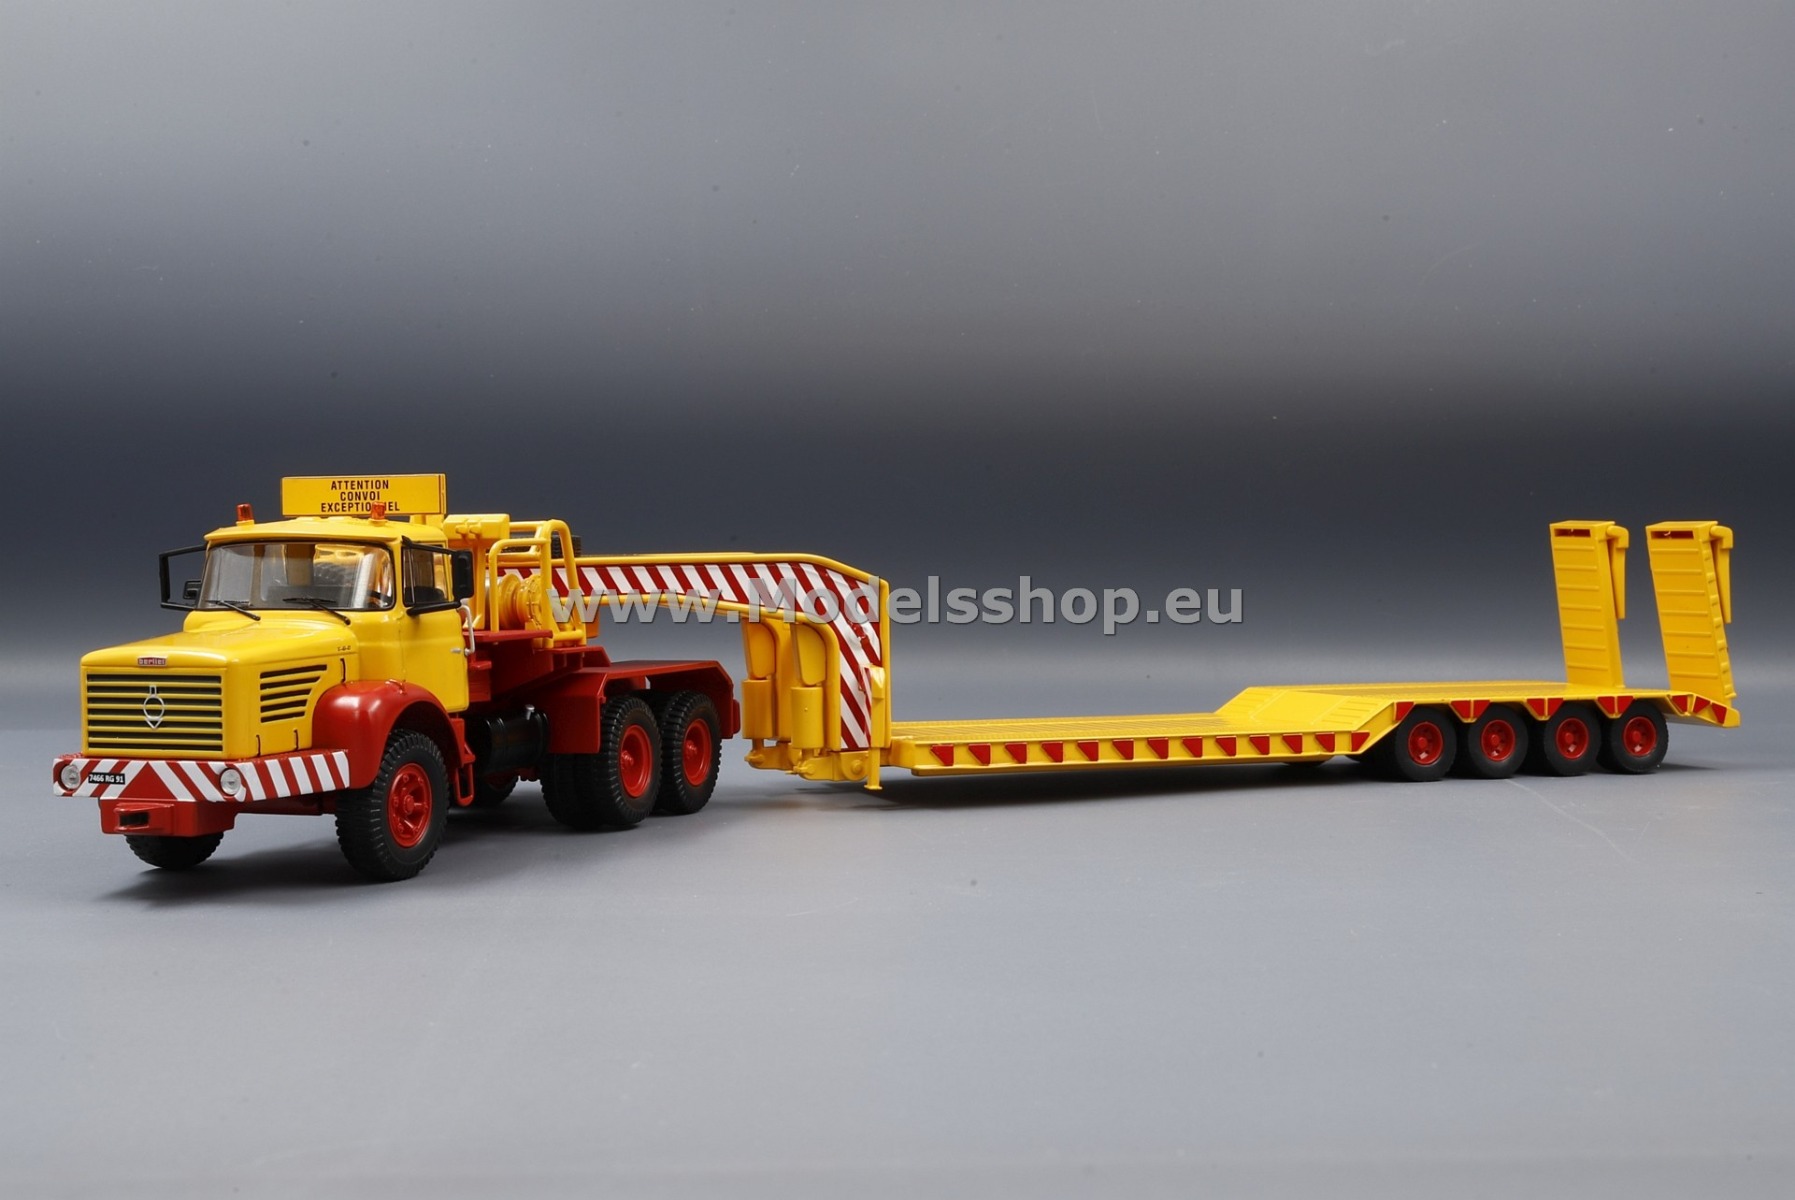 IXO TTR028.22 Berliet TB 015 M3 6x4 tractor truck with low loader trailer, 1960 /yellow/